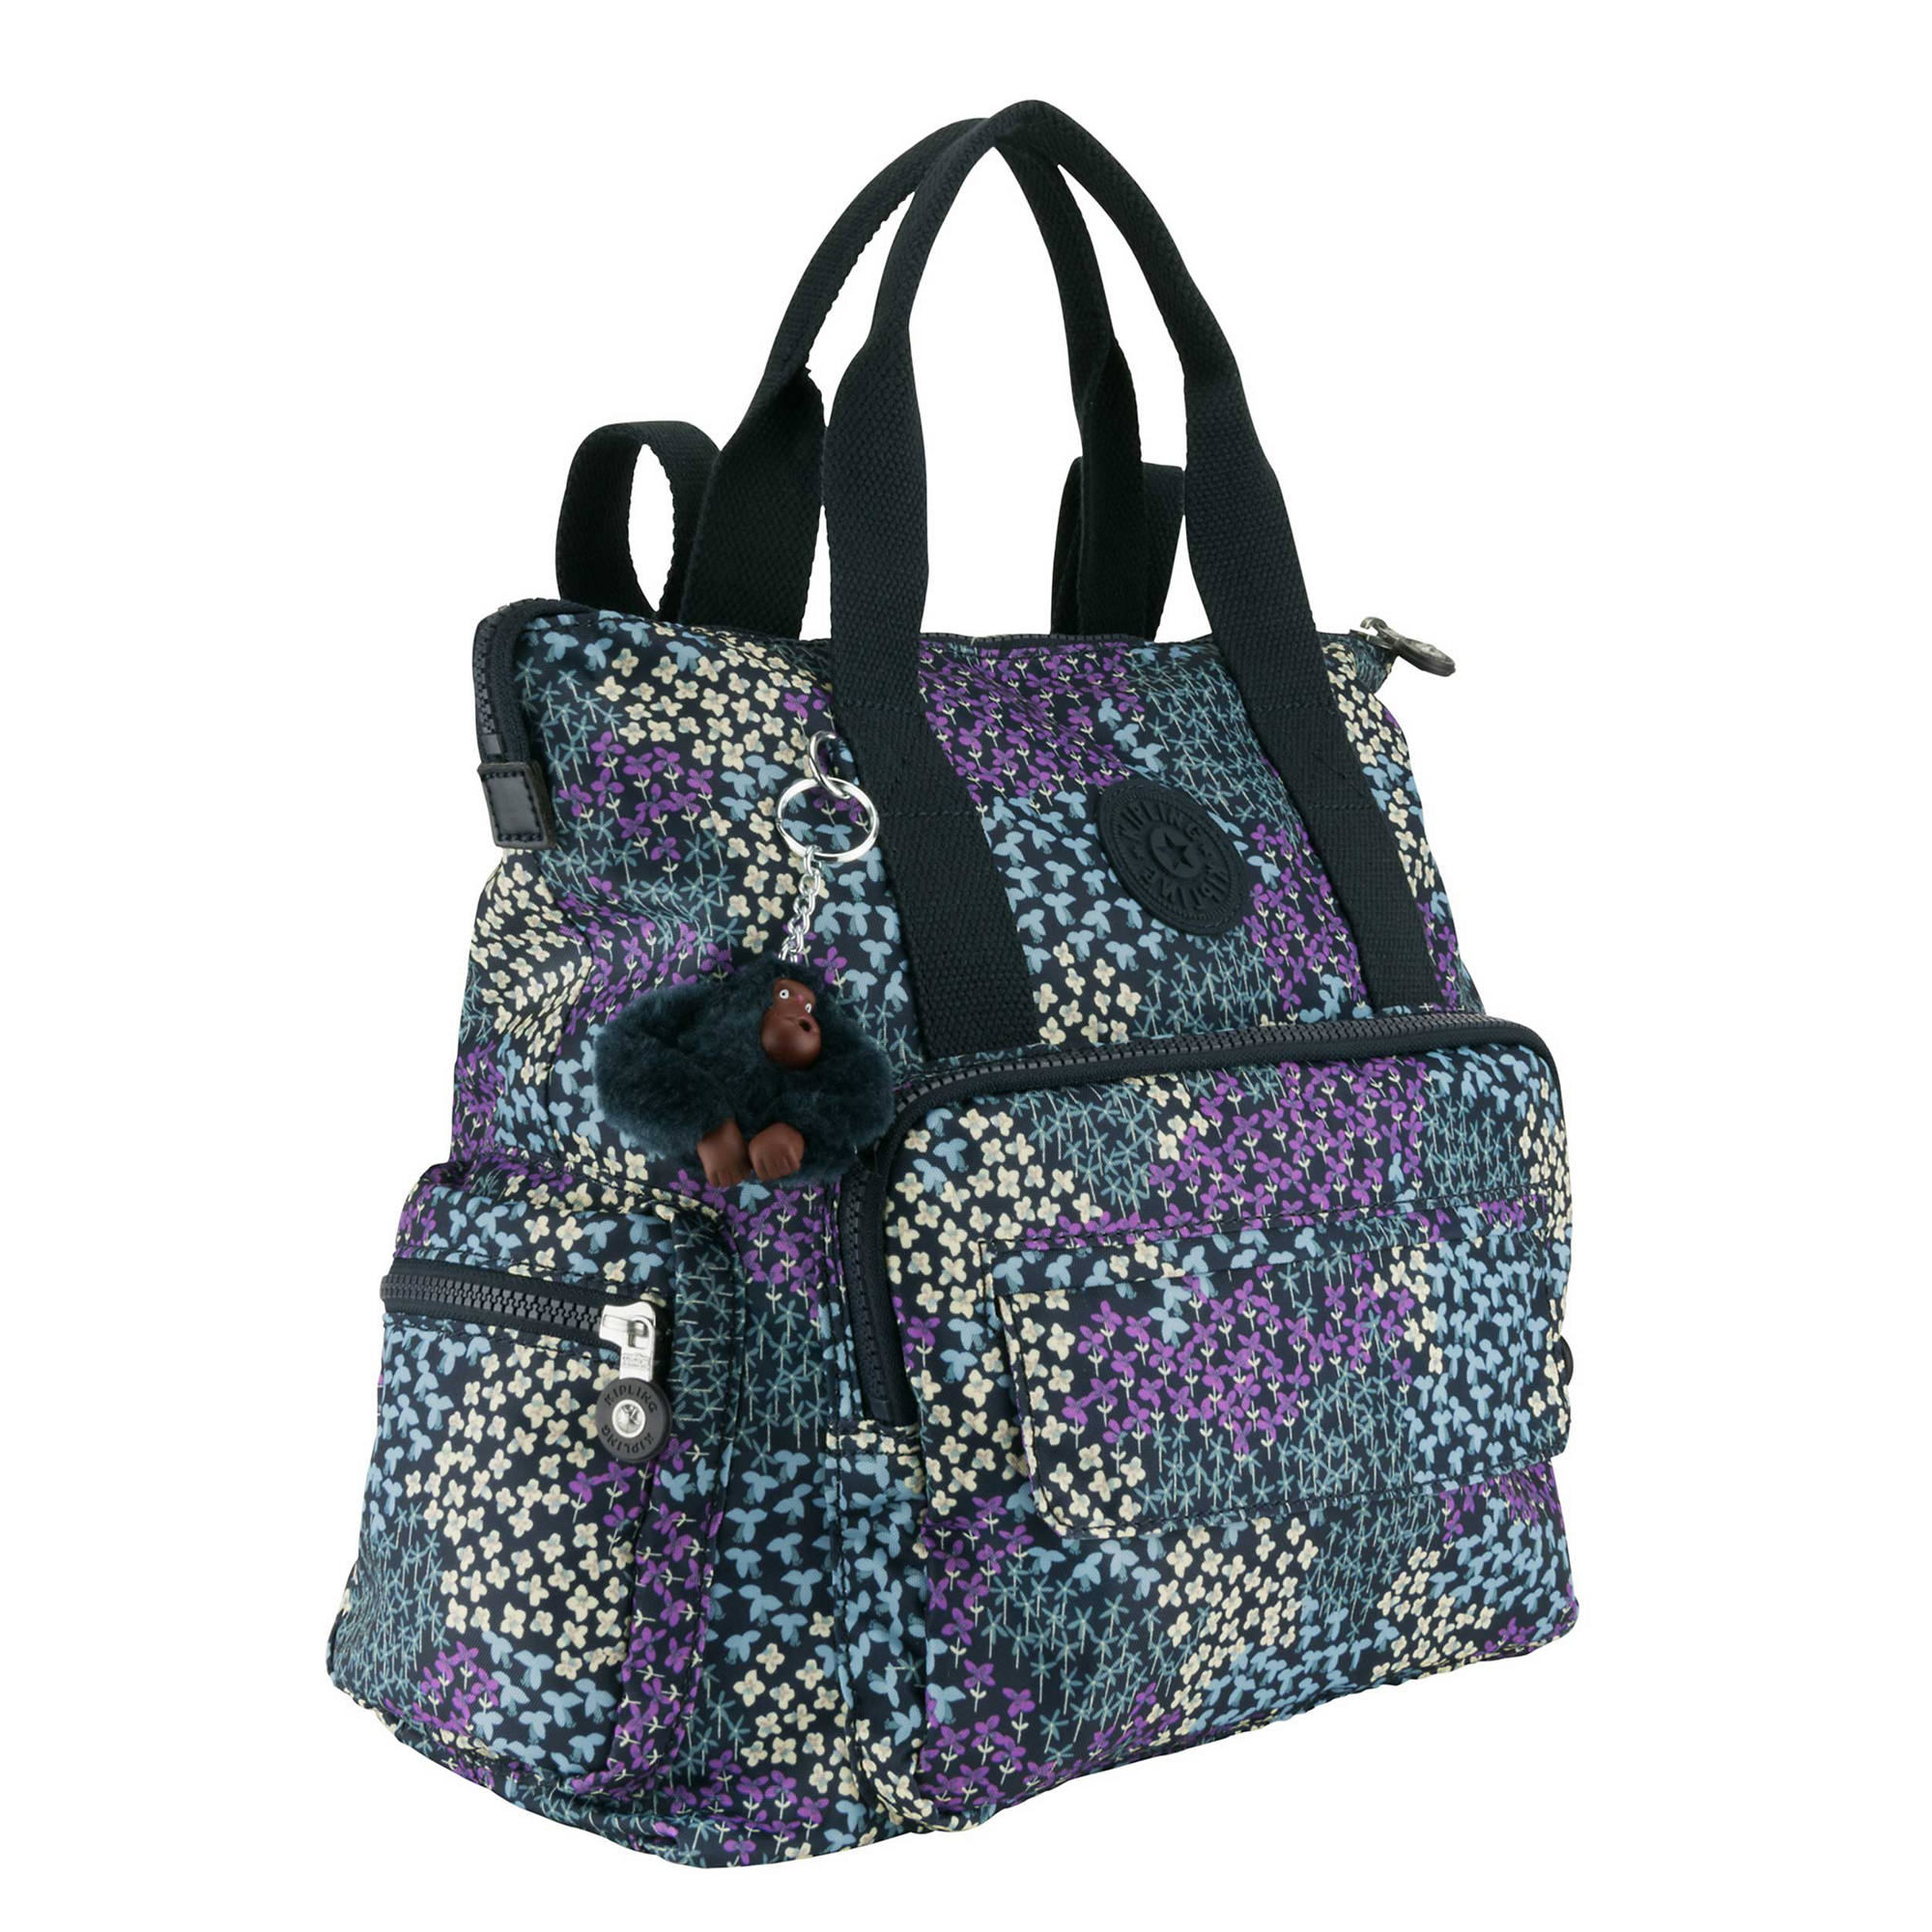 KIPLING ALVY PRINTED Convertible Backpack Tote - $69.99 | PicClick